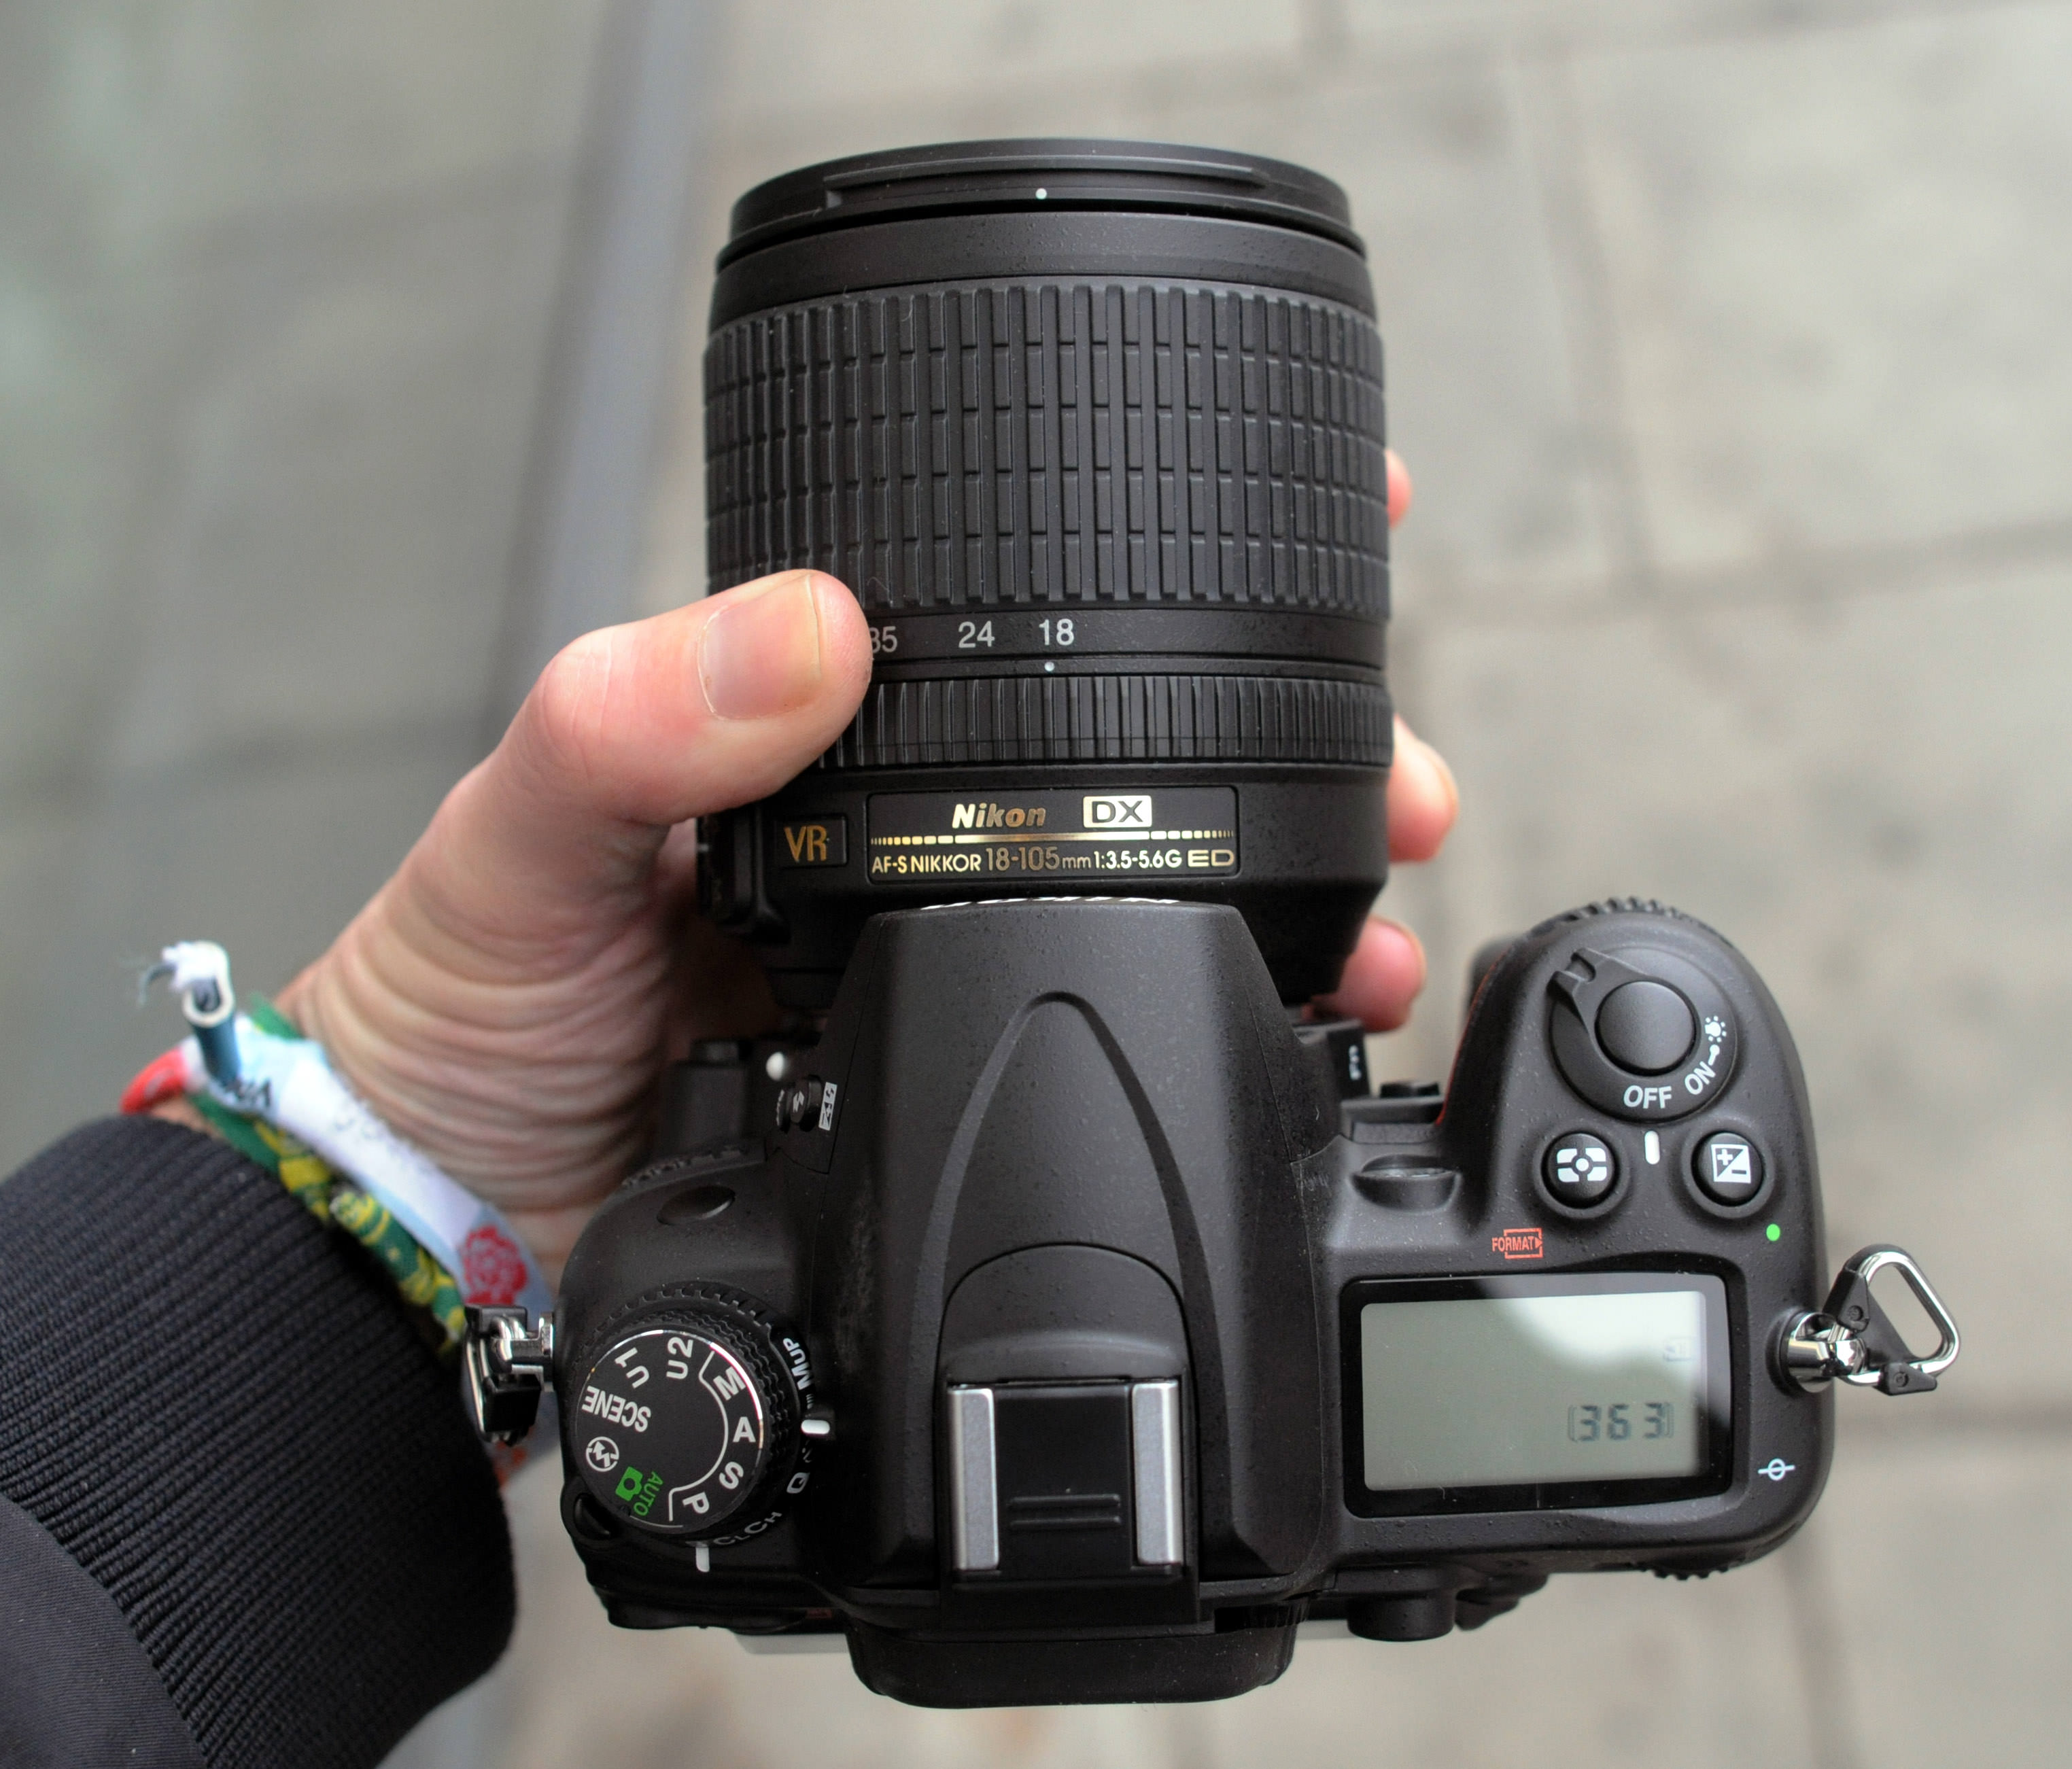 Nikon D7000 Hands On Preview Digital SLR Review